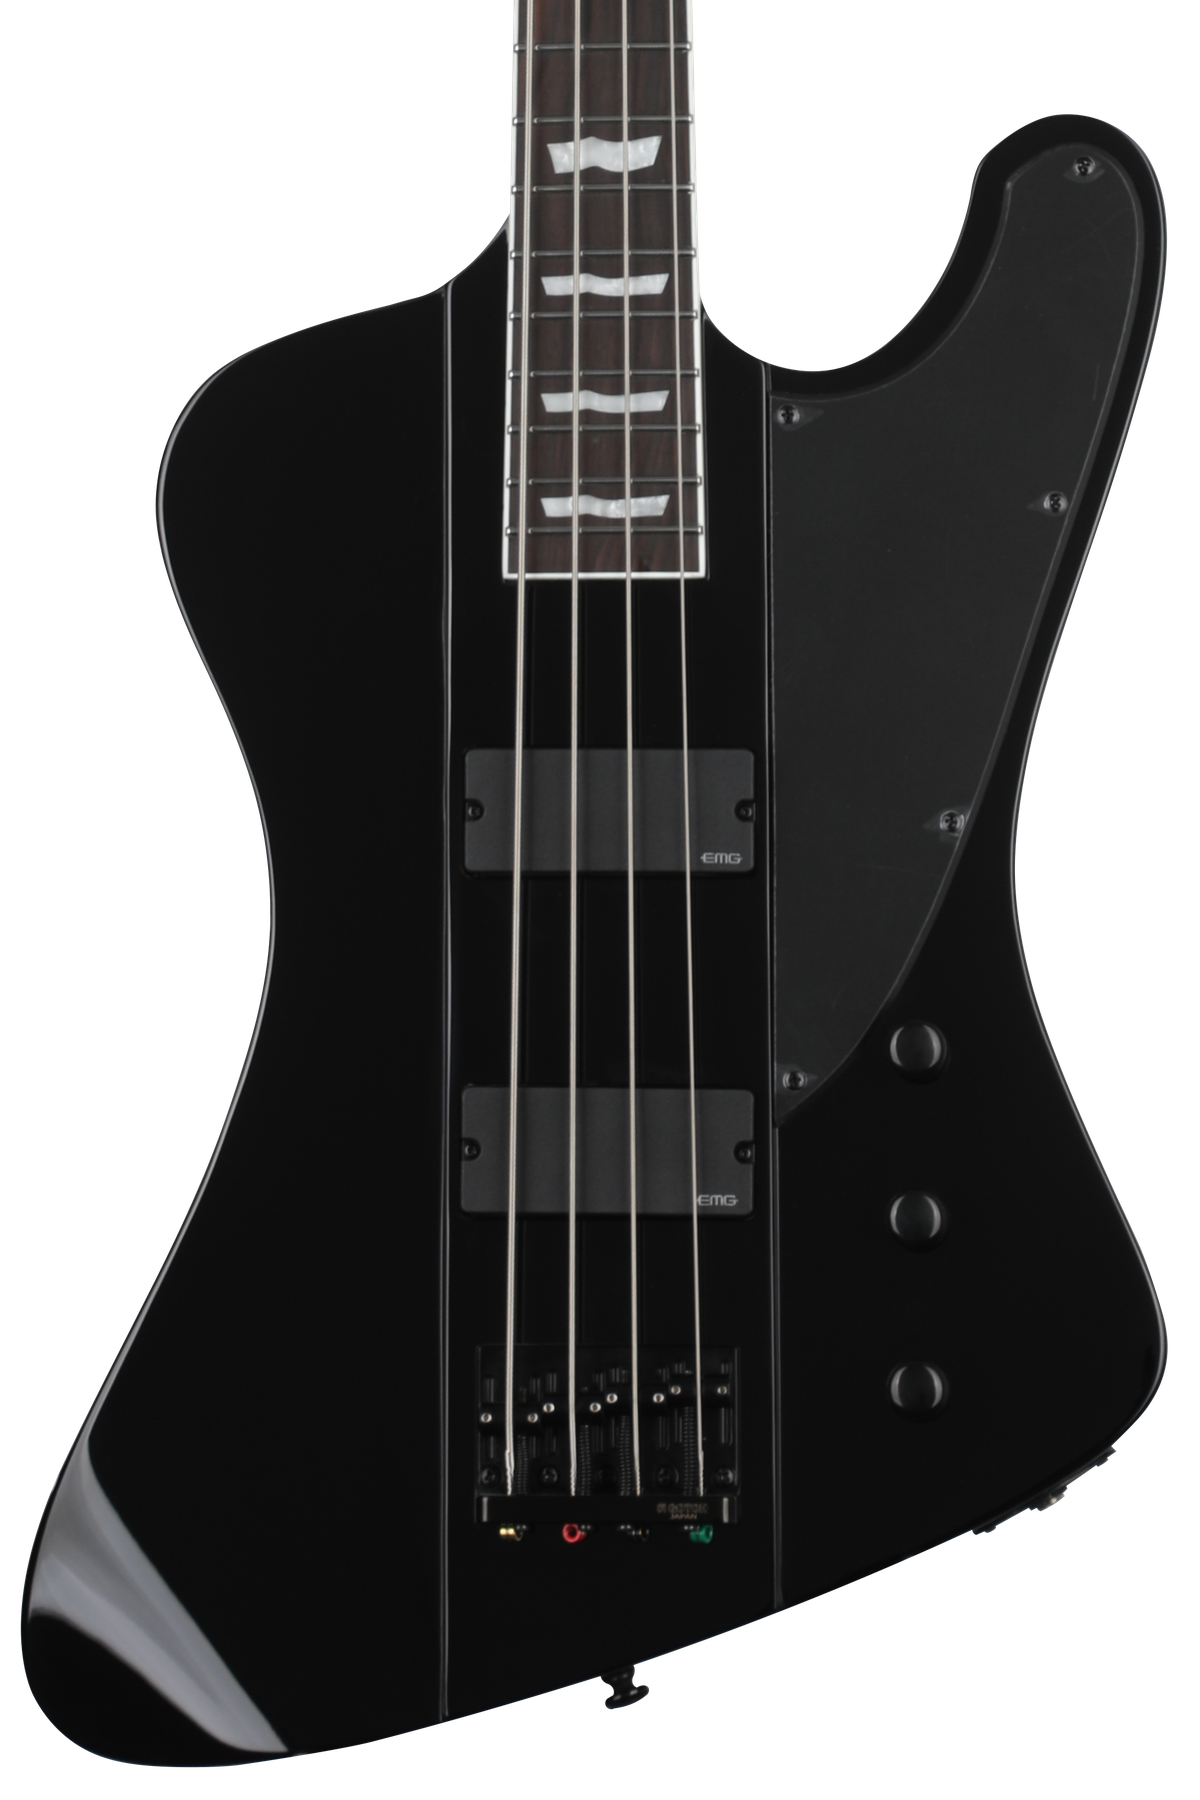 ESP LTD Phoenix-1004 Bass Guitar - Black | Sweetwater